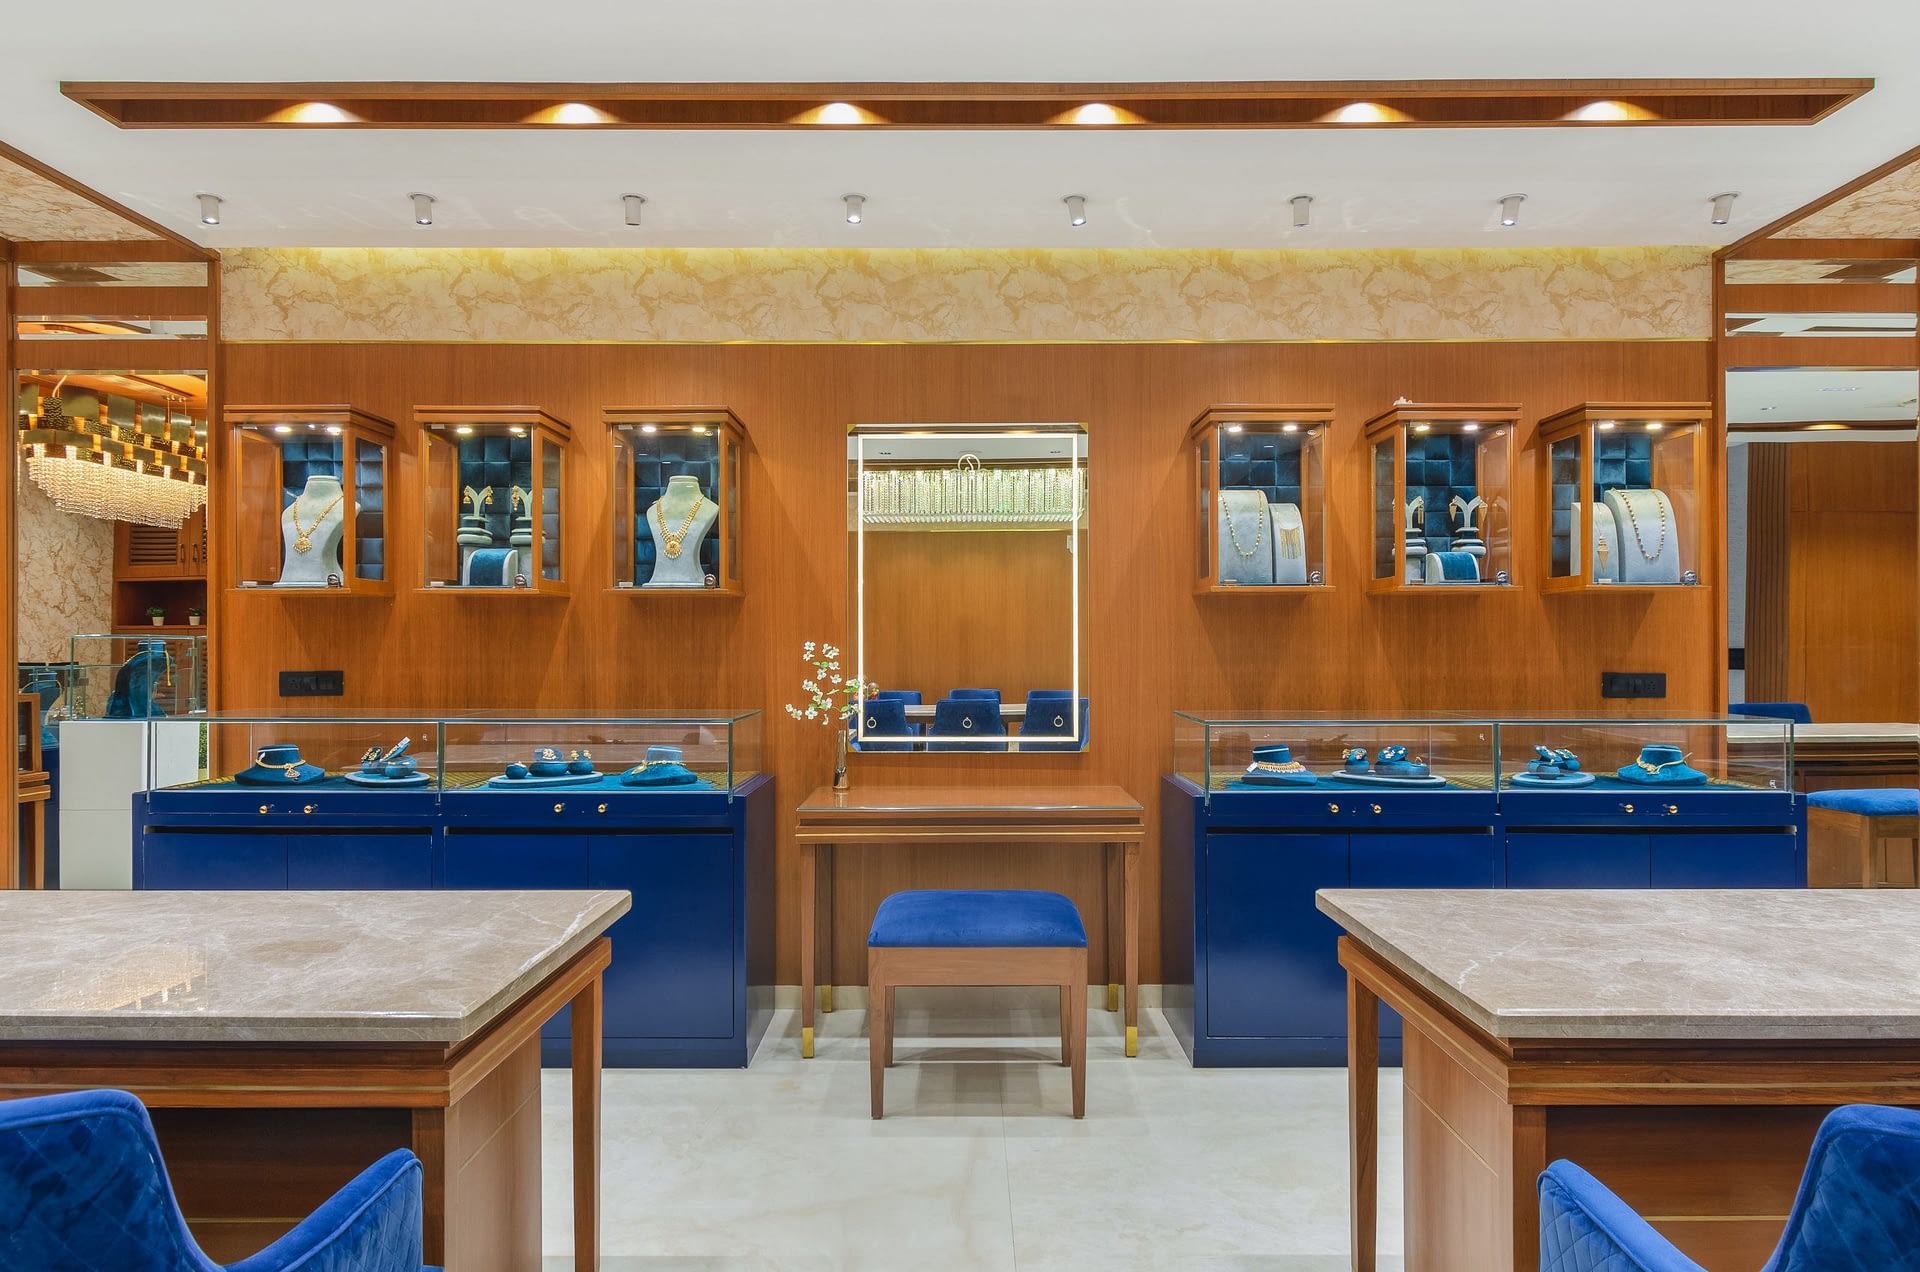 Jewellery retail Interior design by BUILDEK